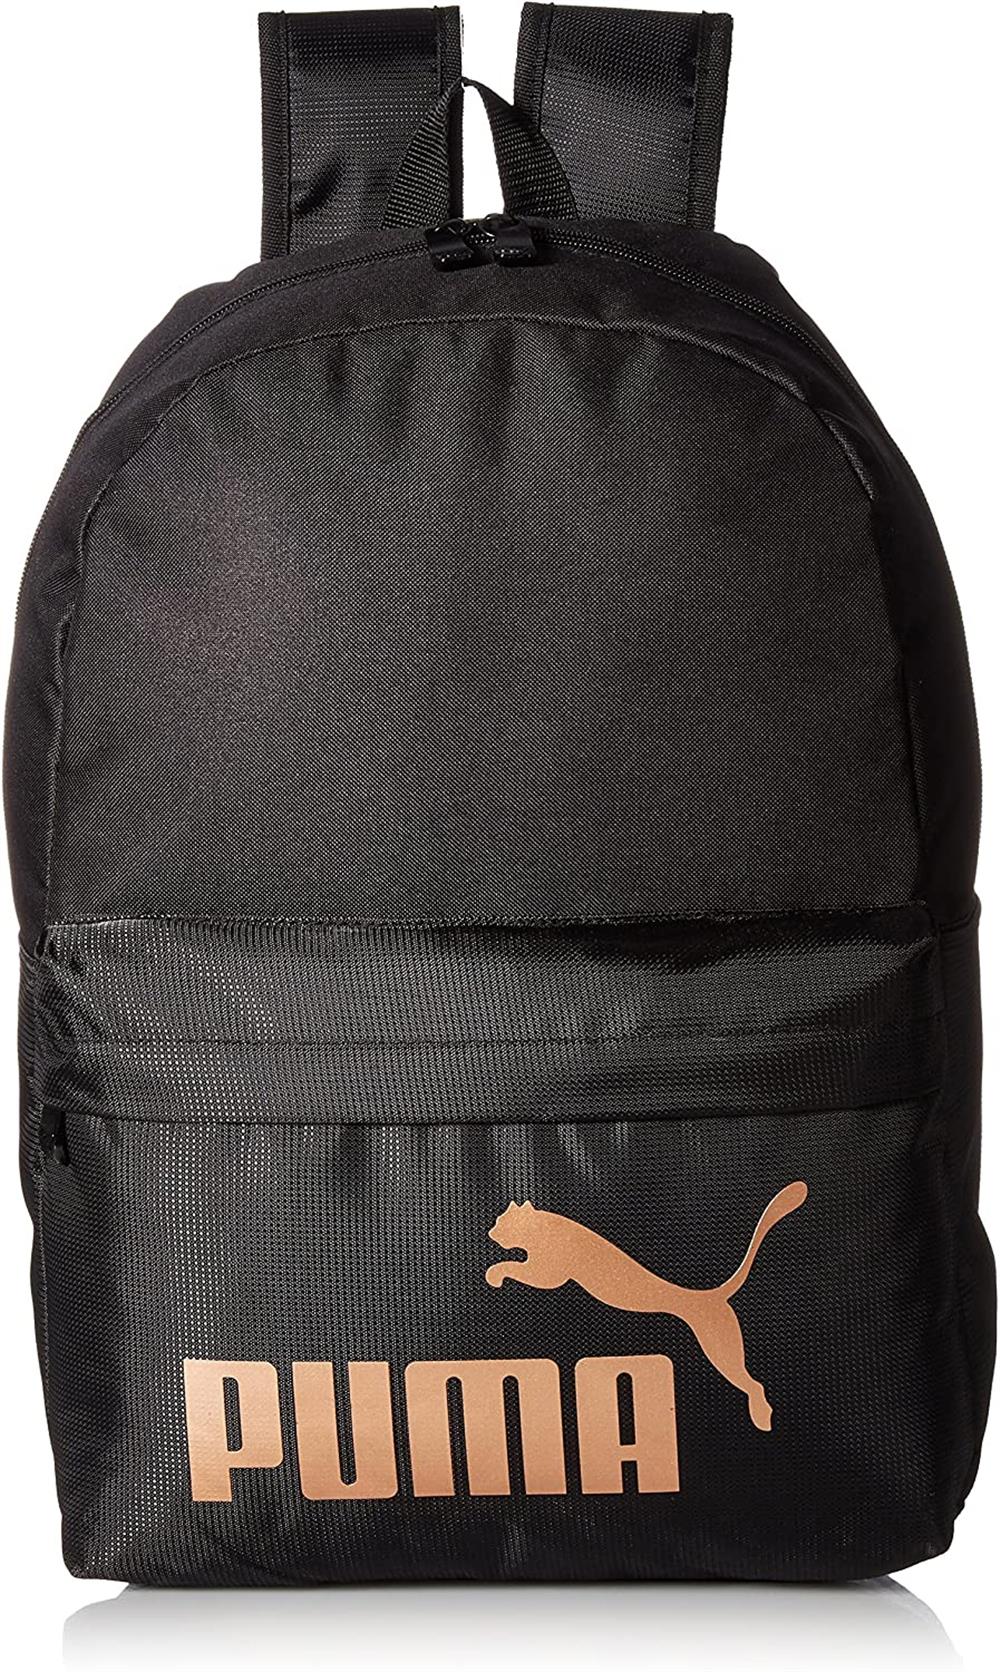 Puma Evercat Lifeline Backpack